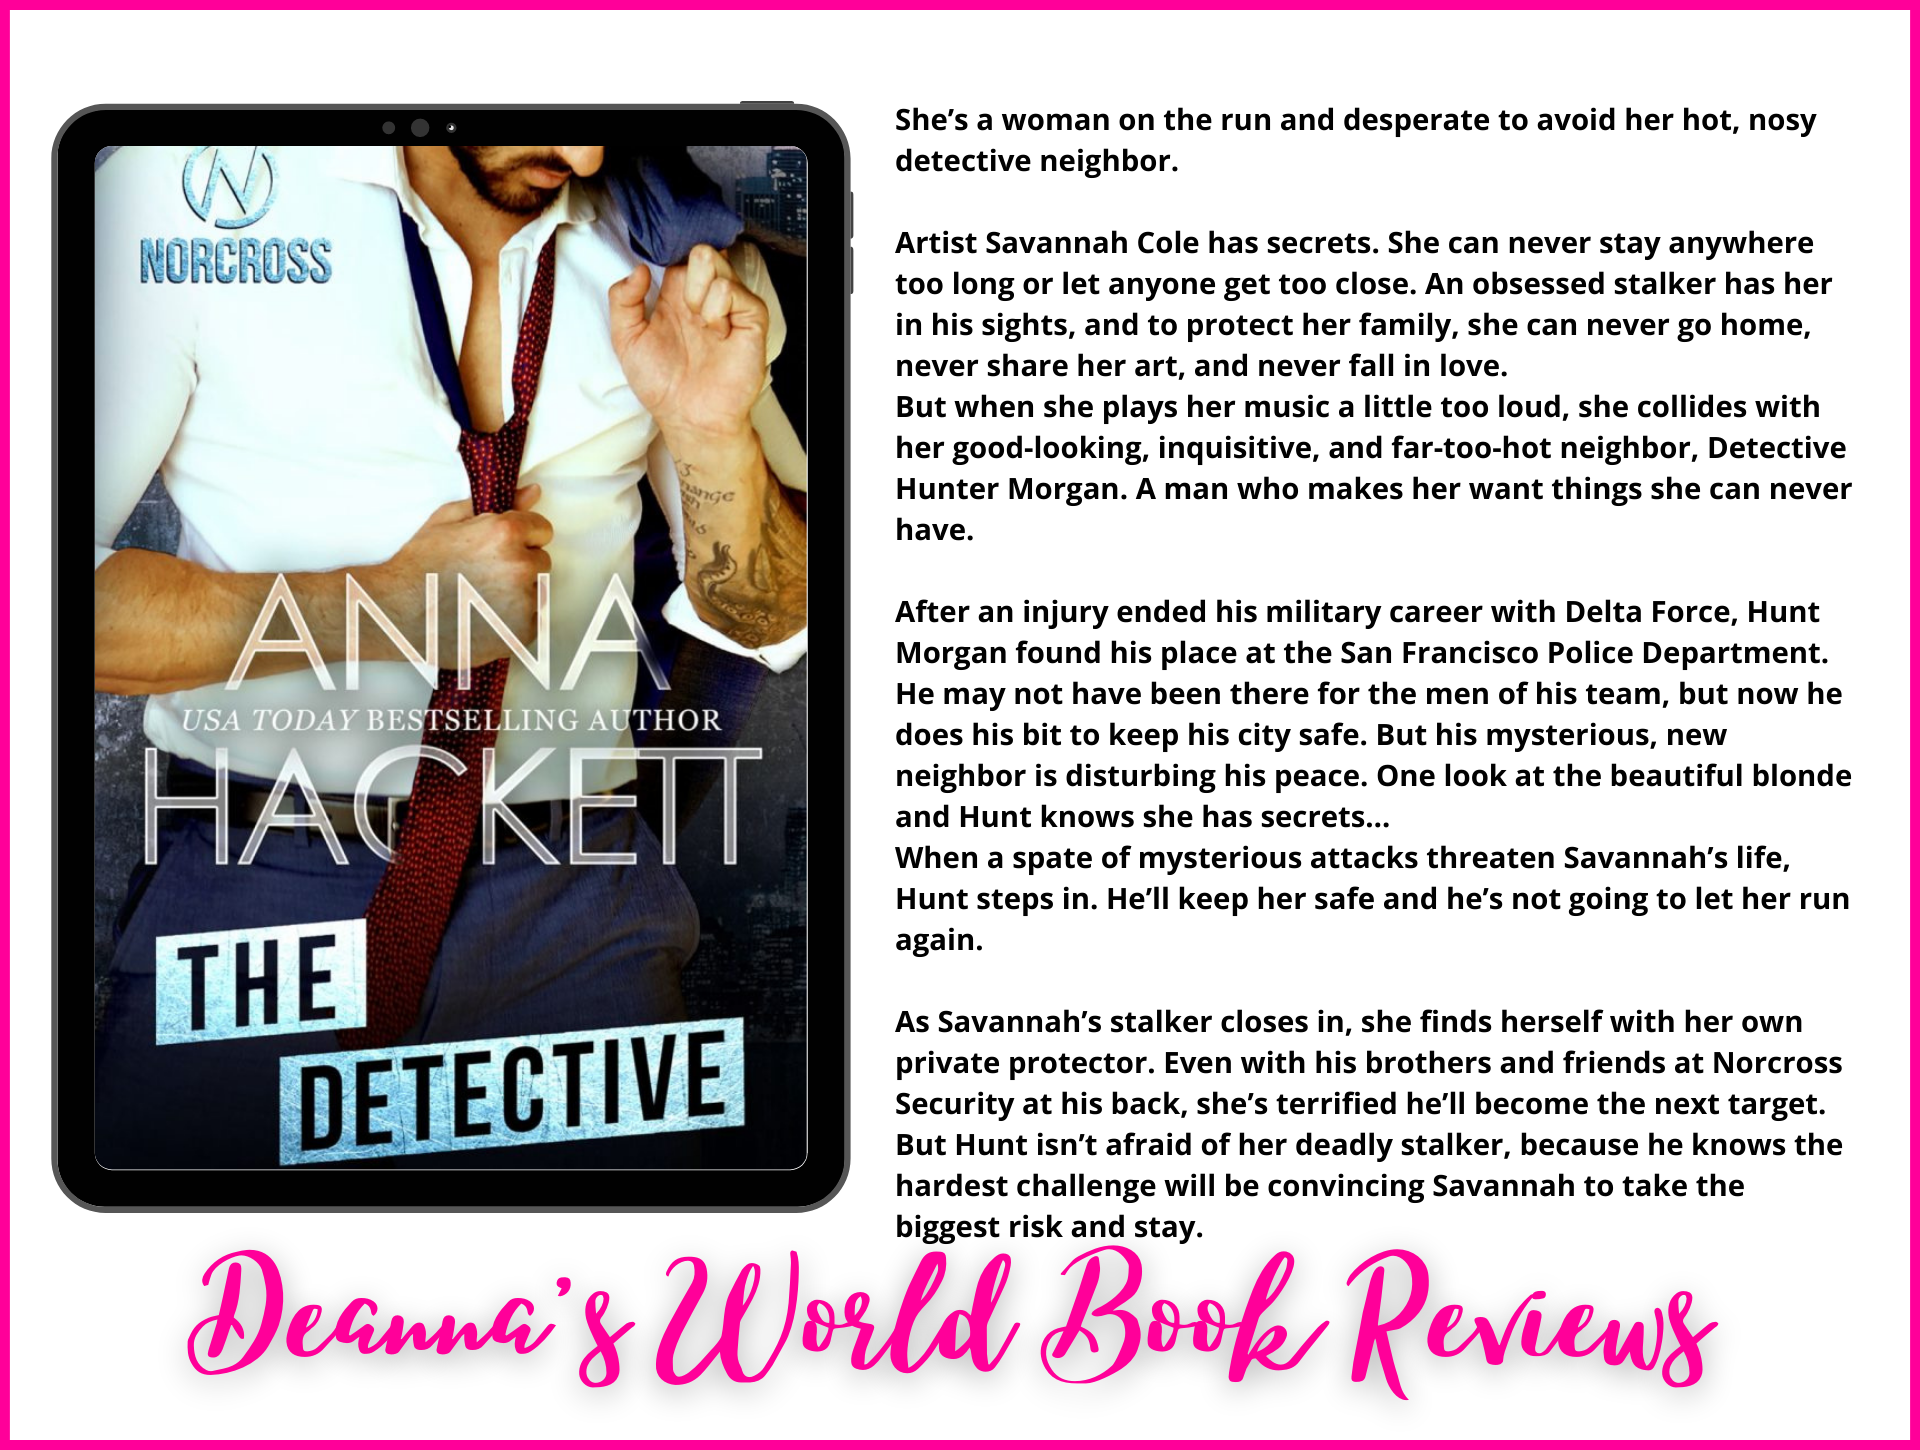 The Detective by Anna Hackett blurb